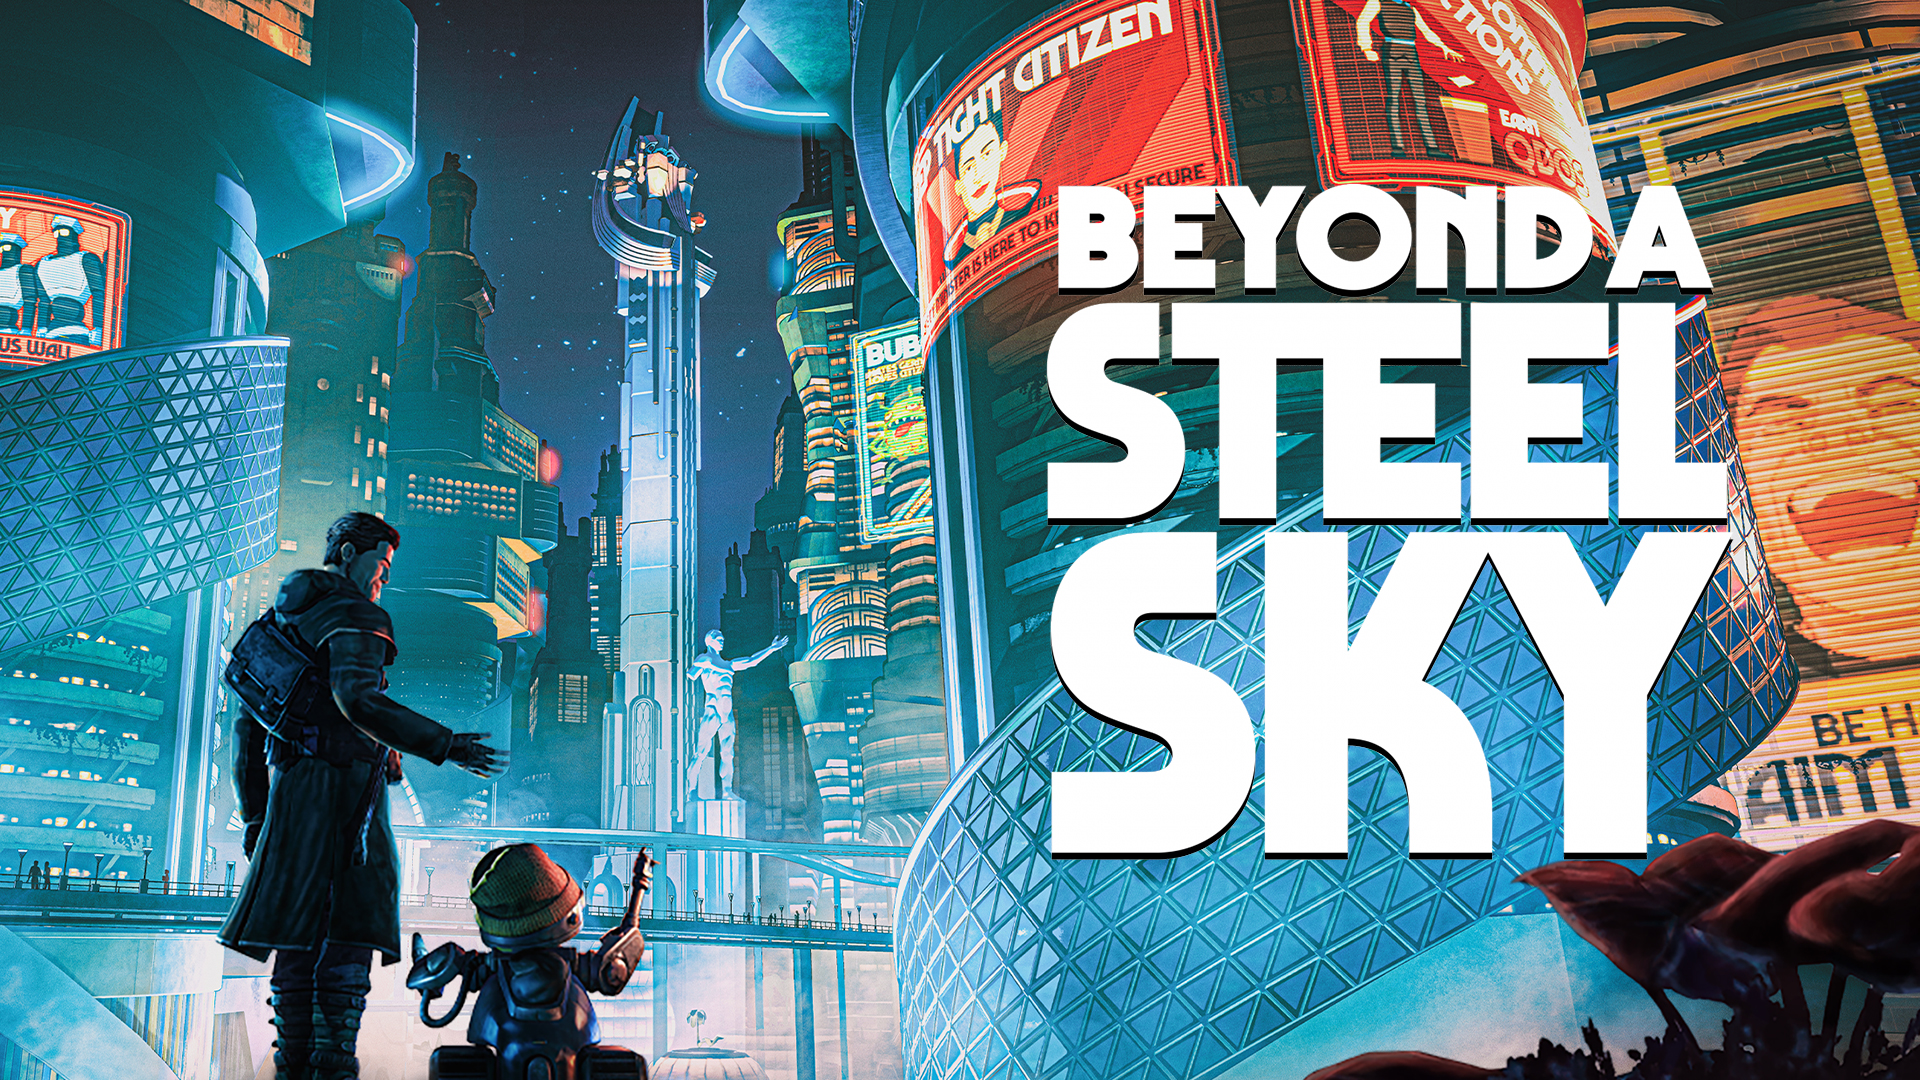 beyond a steel sky achievements guide